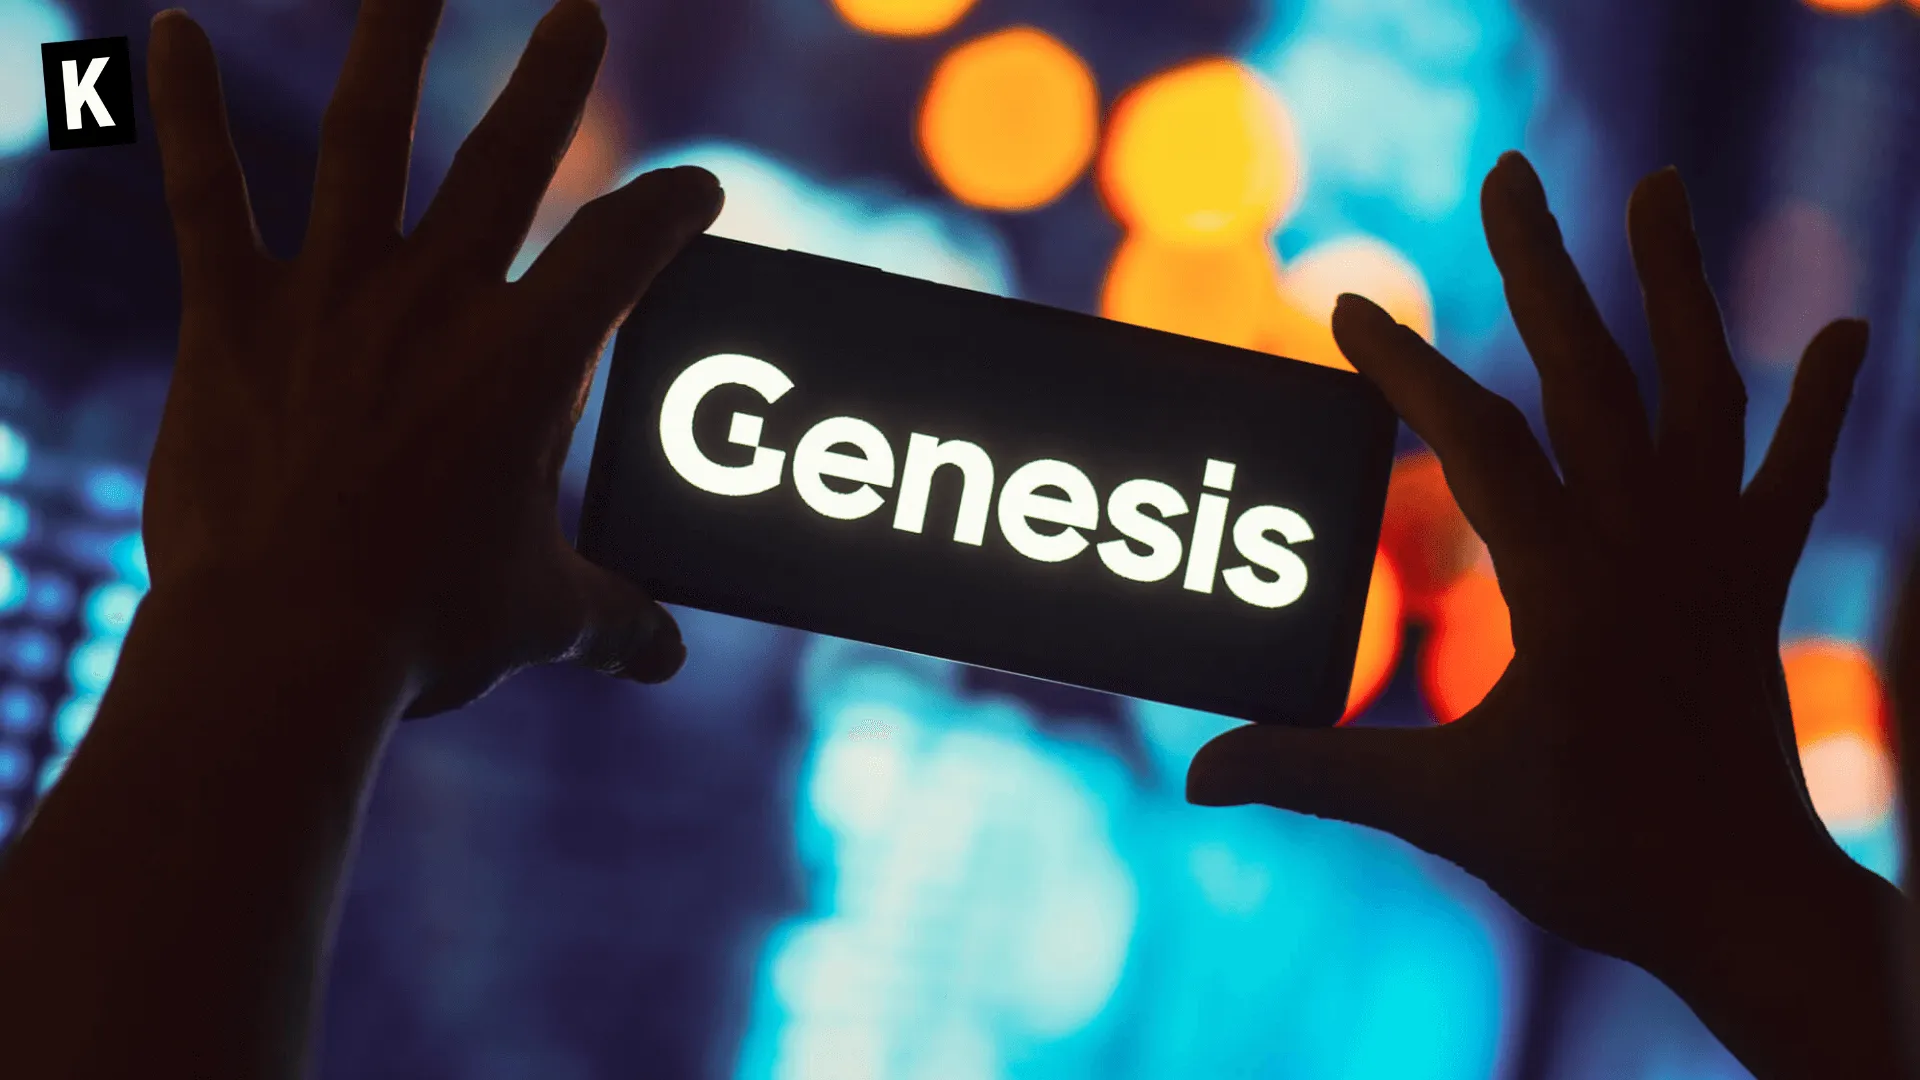 Genesis logo on a phone screen